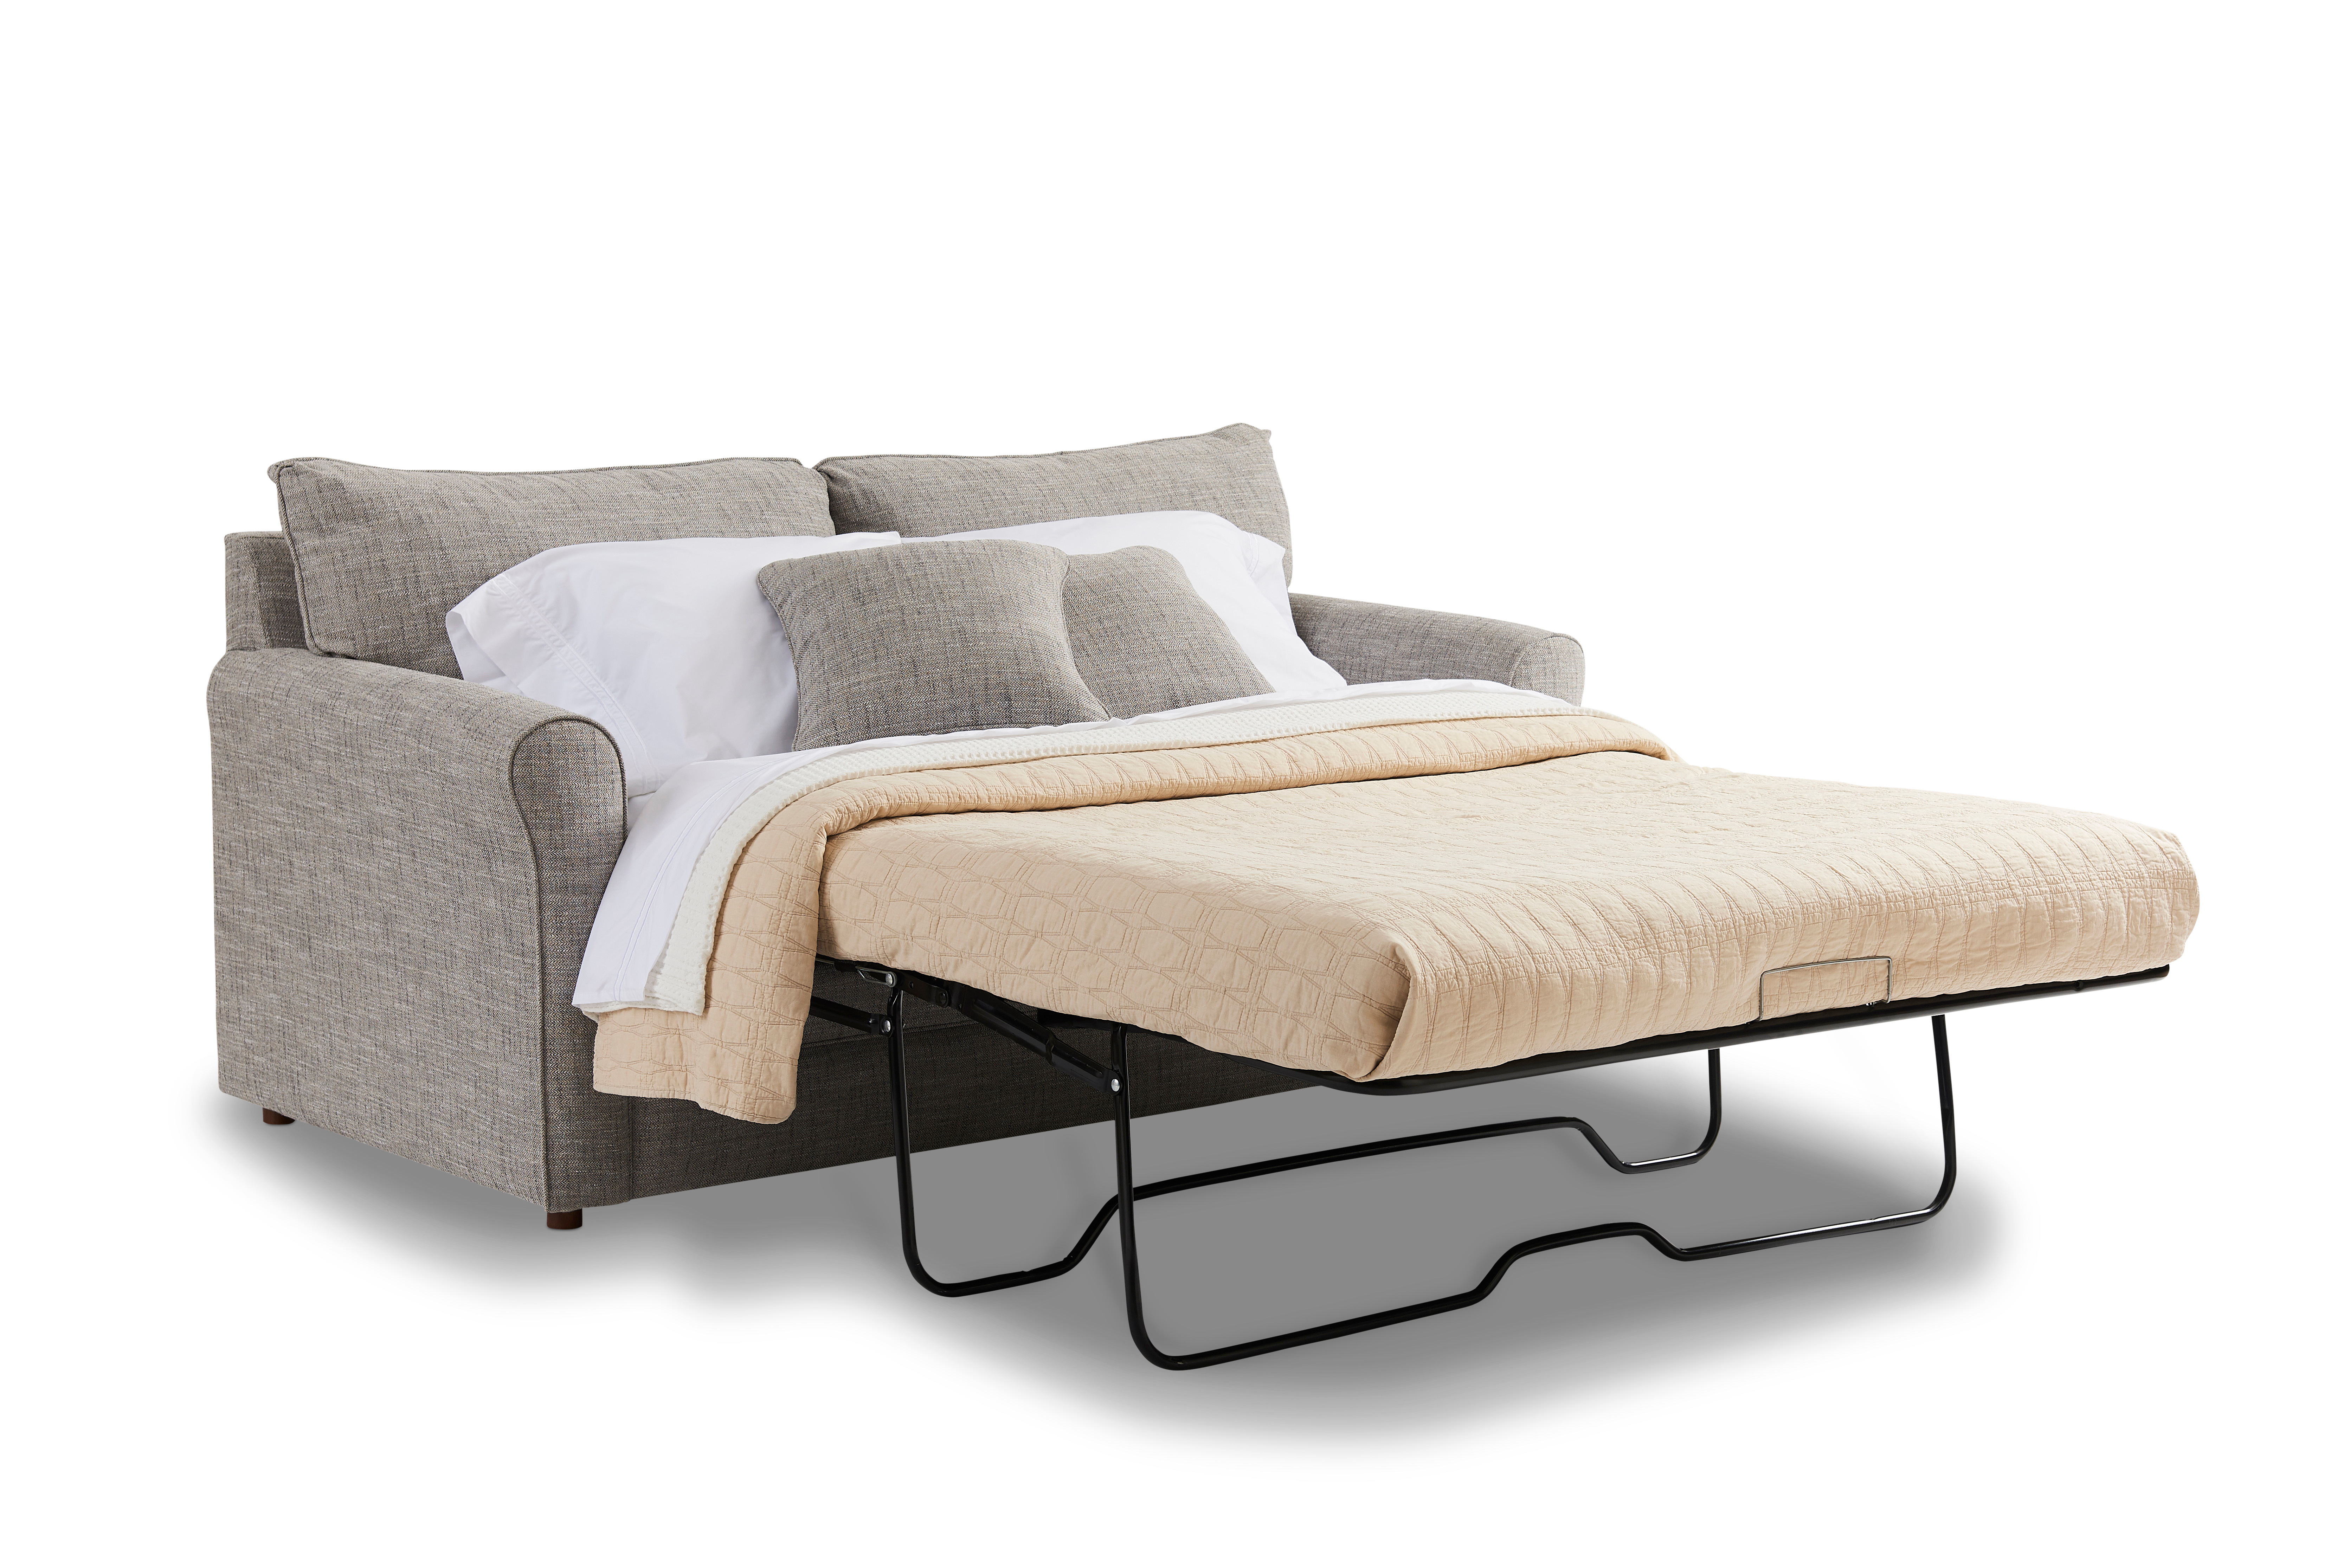 Image - 1 - Leah Fabric SUPREME-COMFORT Queen Sleep Sofa